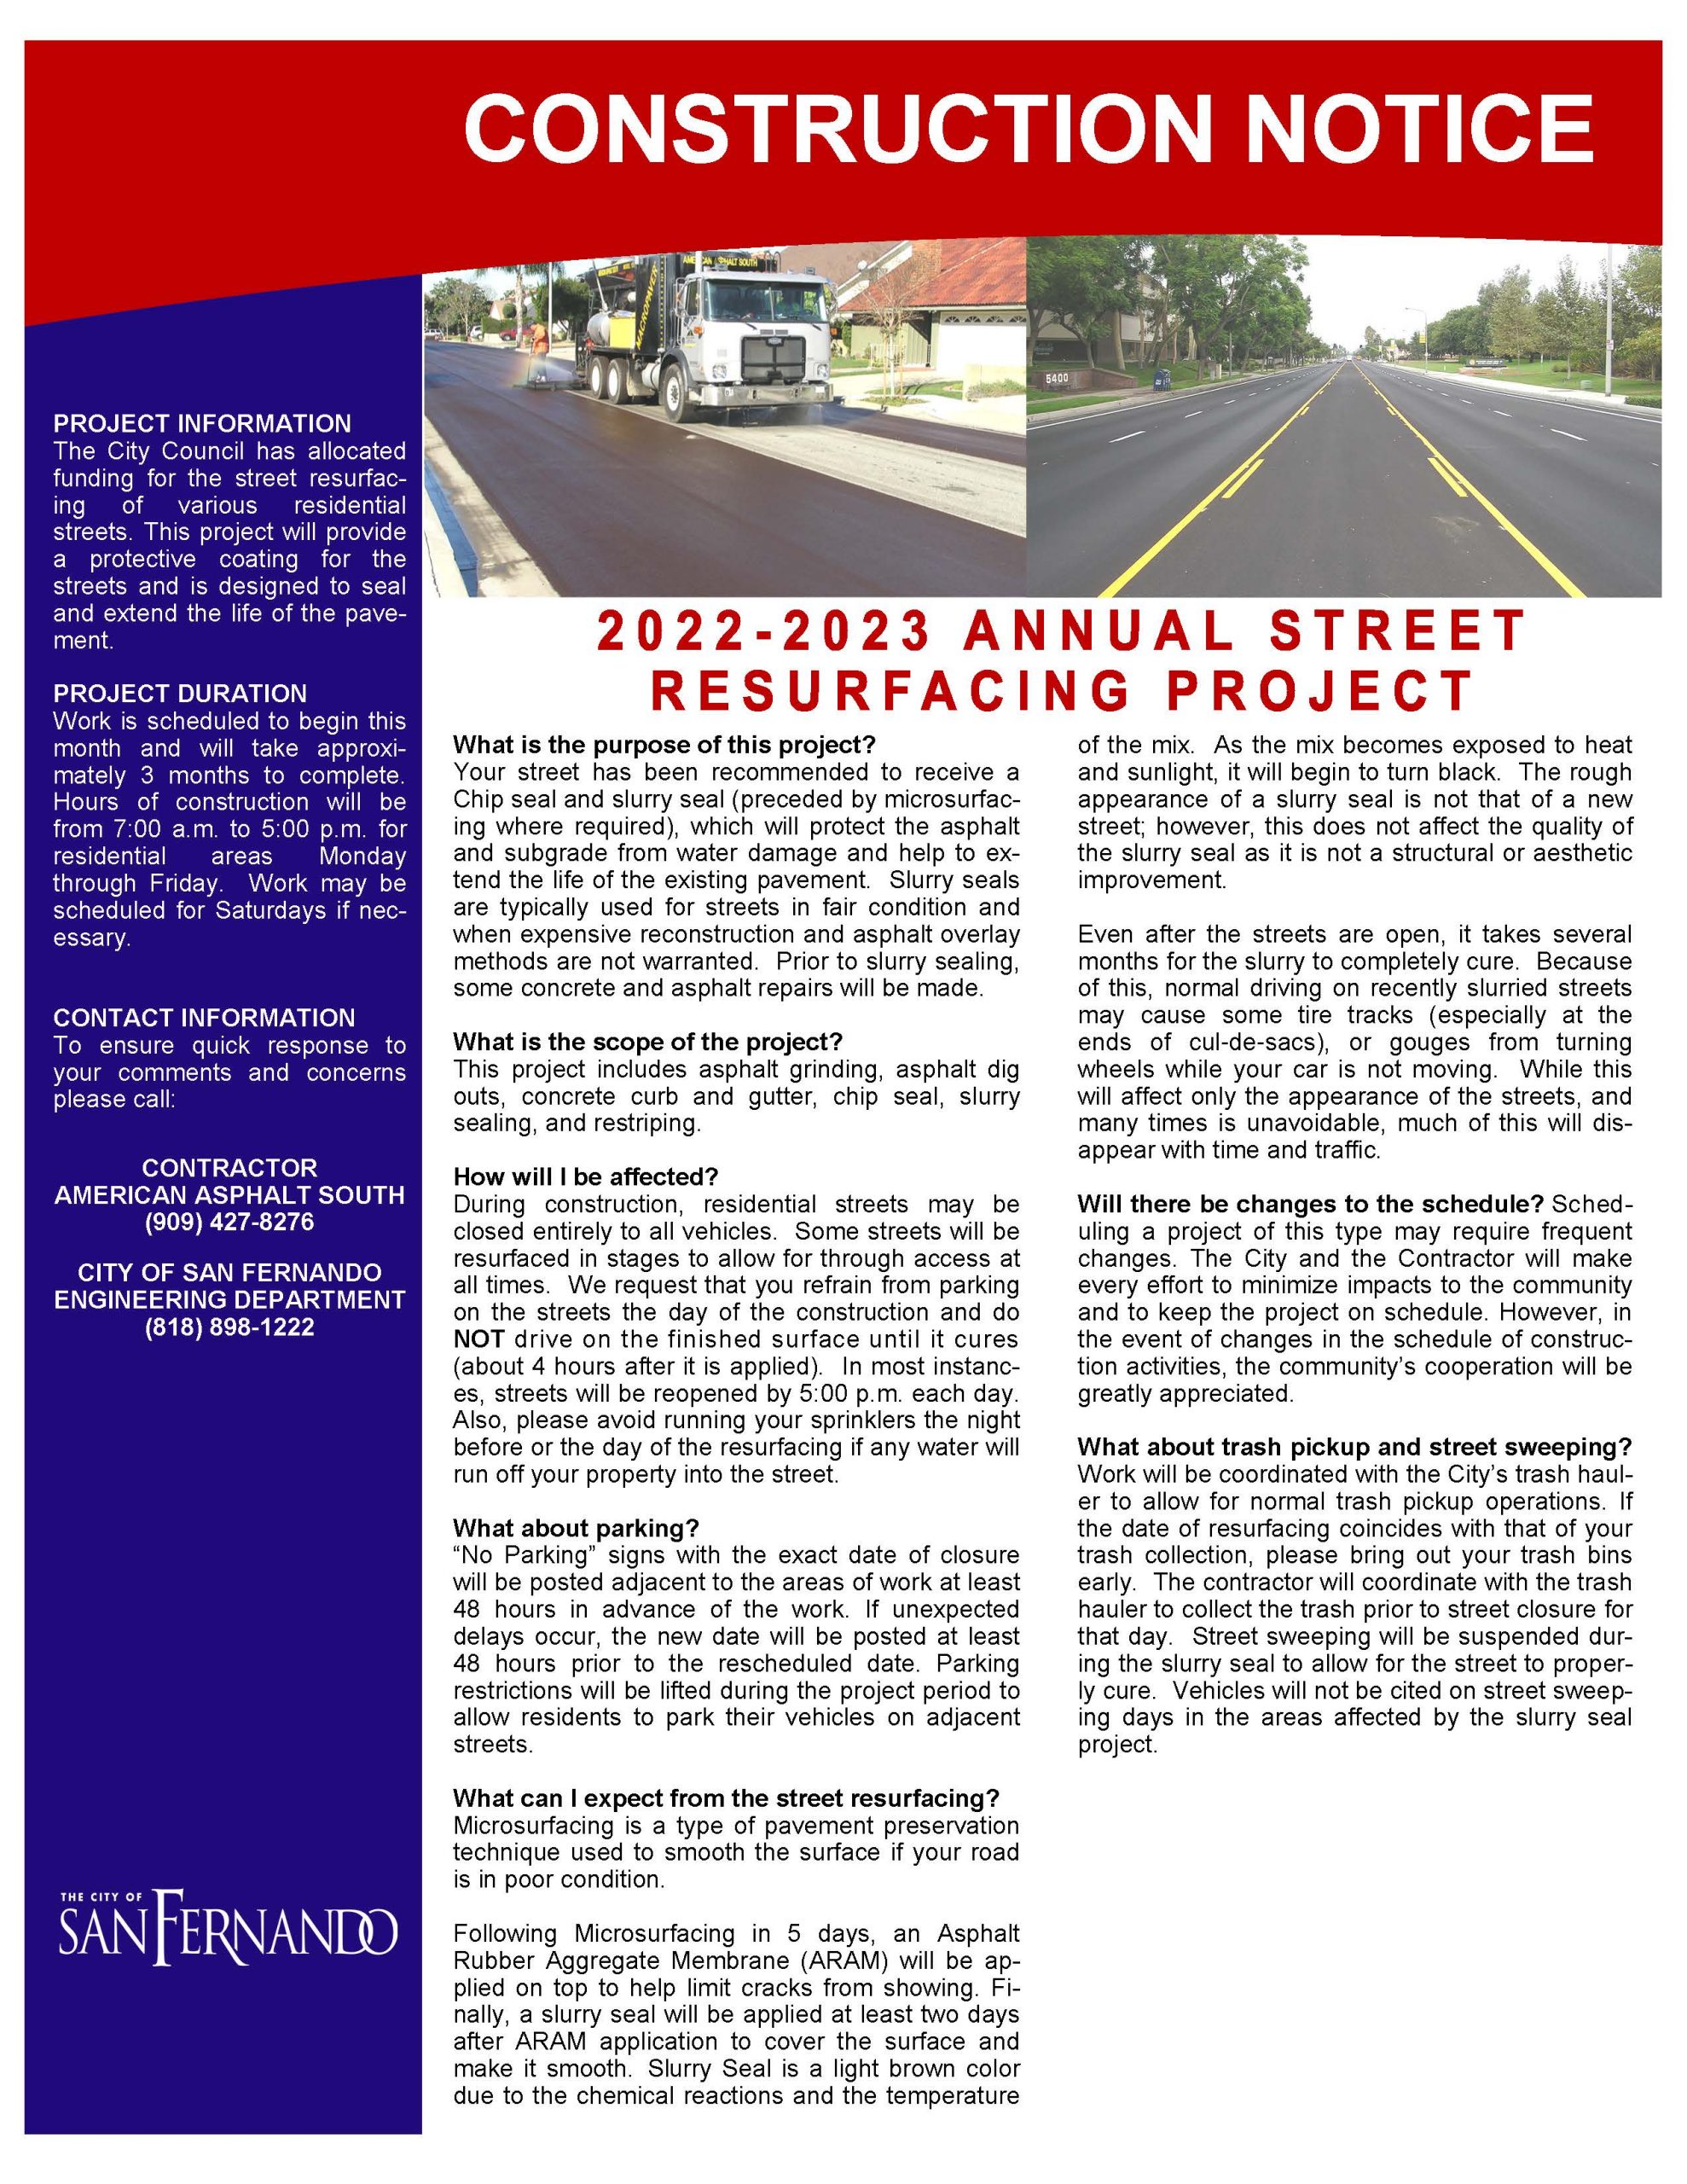 Phase 2 Annual Street Resurfacing Notice